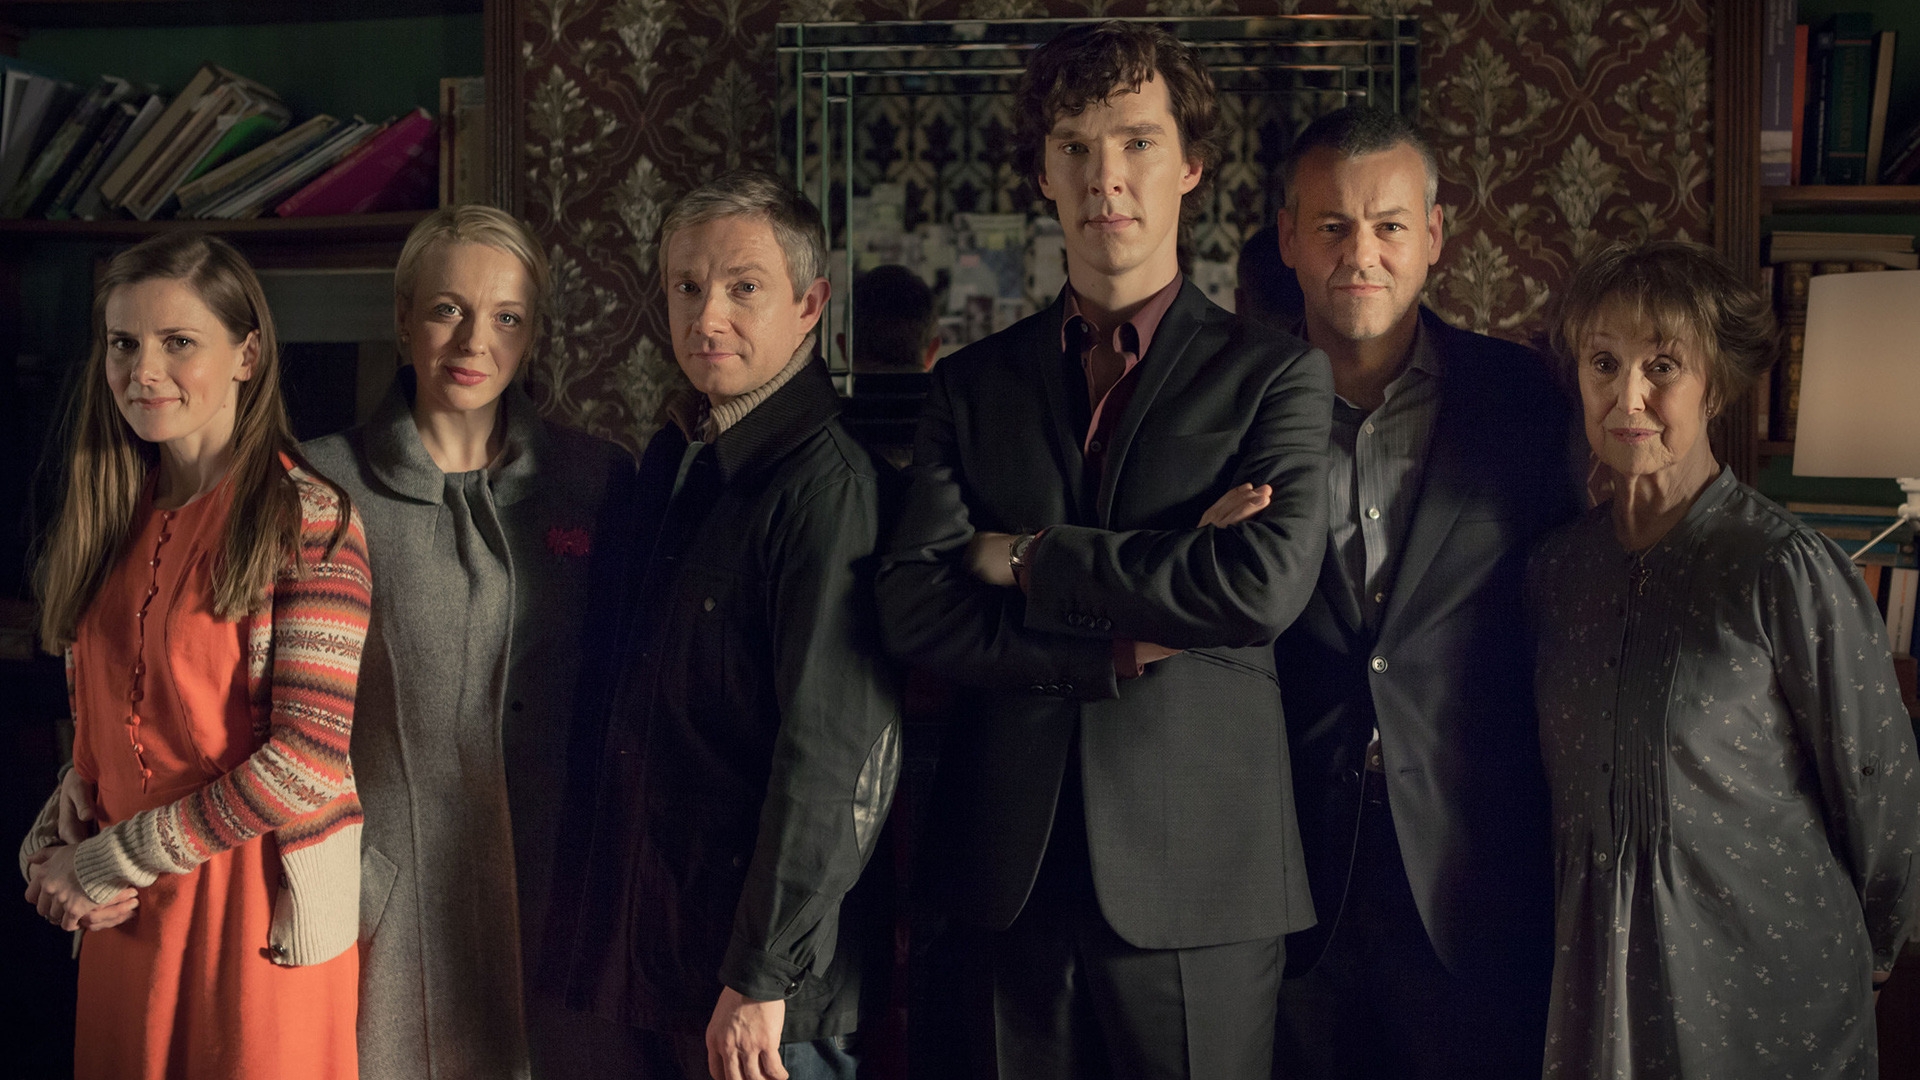 BBC Sherlock Cast for 1920 x 1080 HDTV 1080p resolution